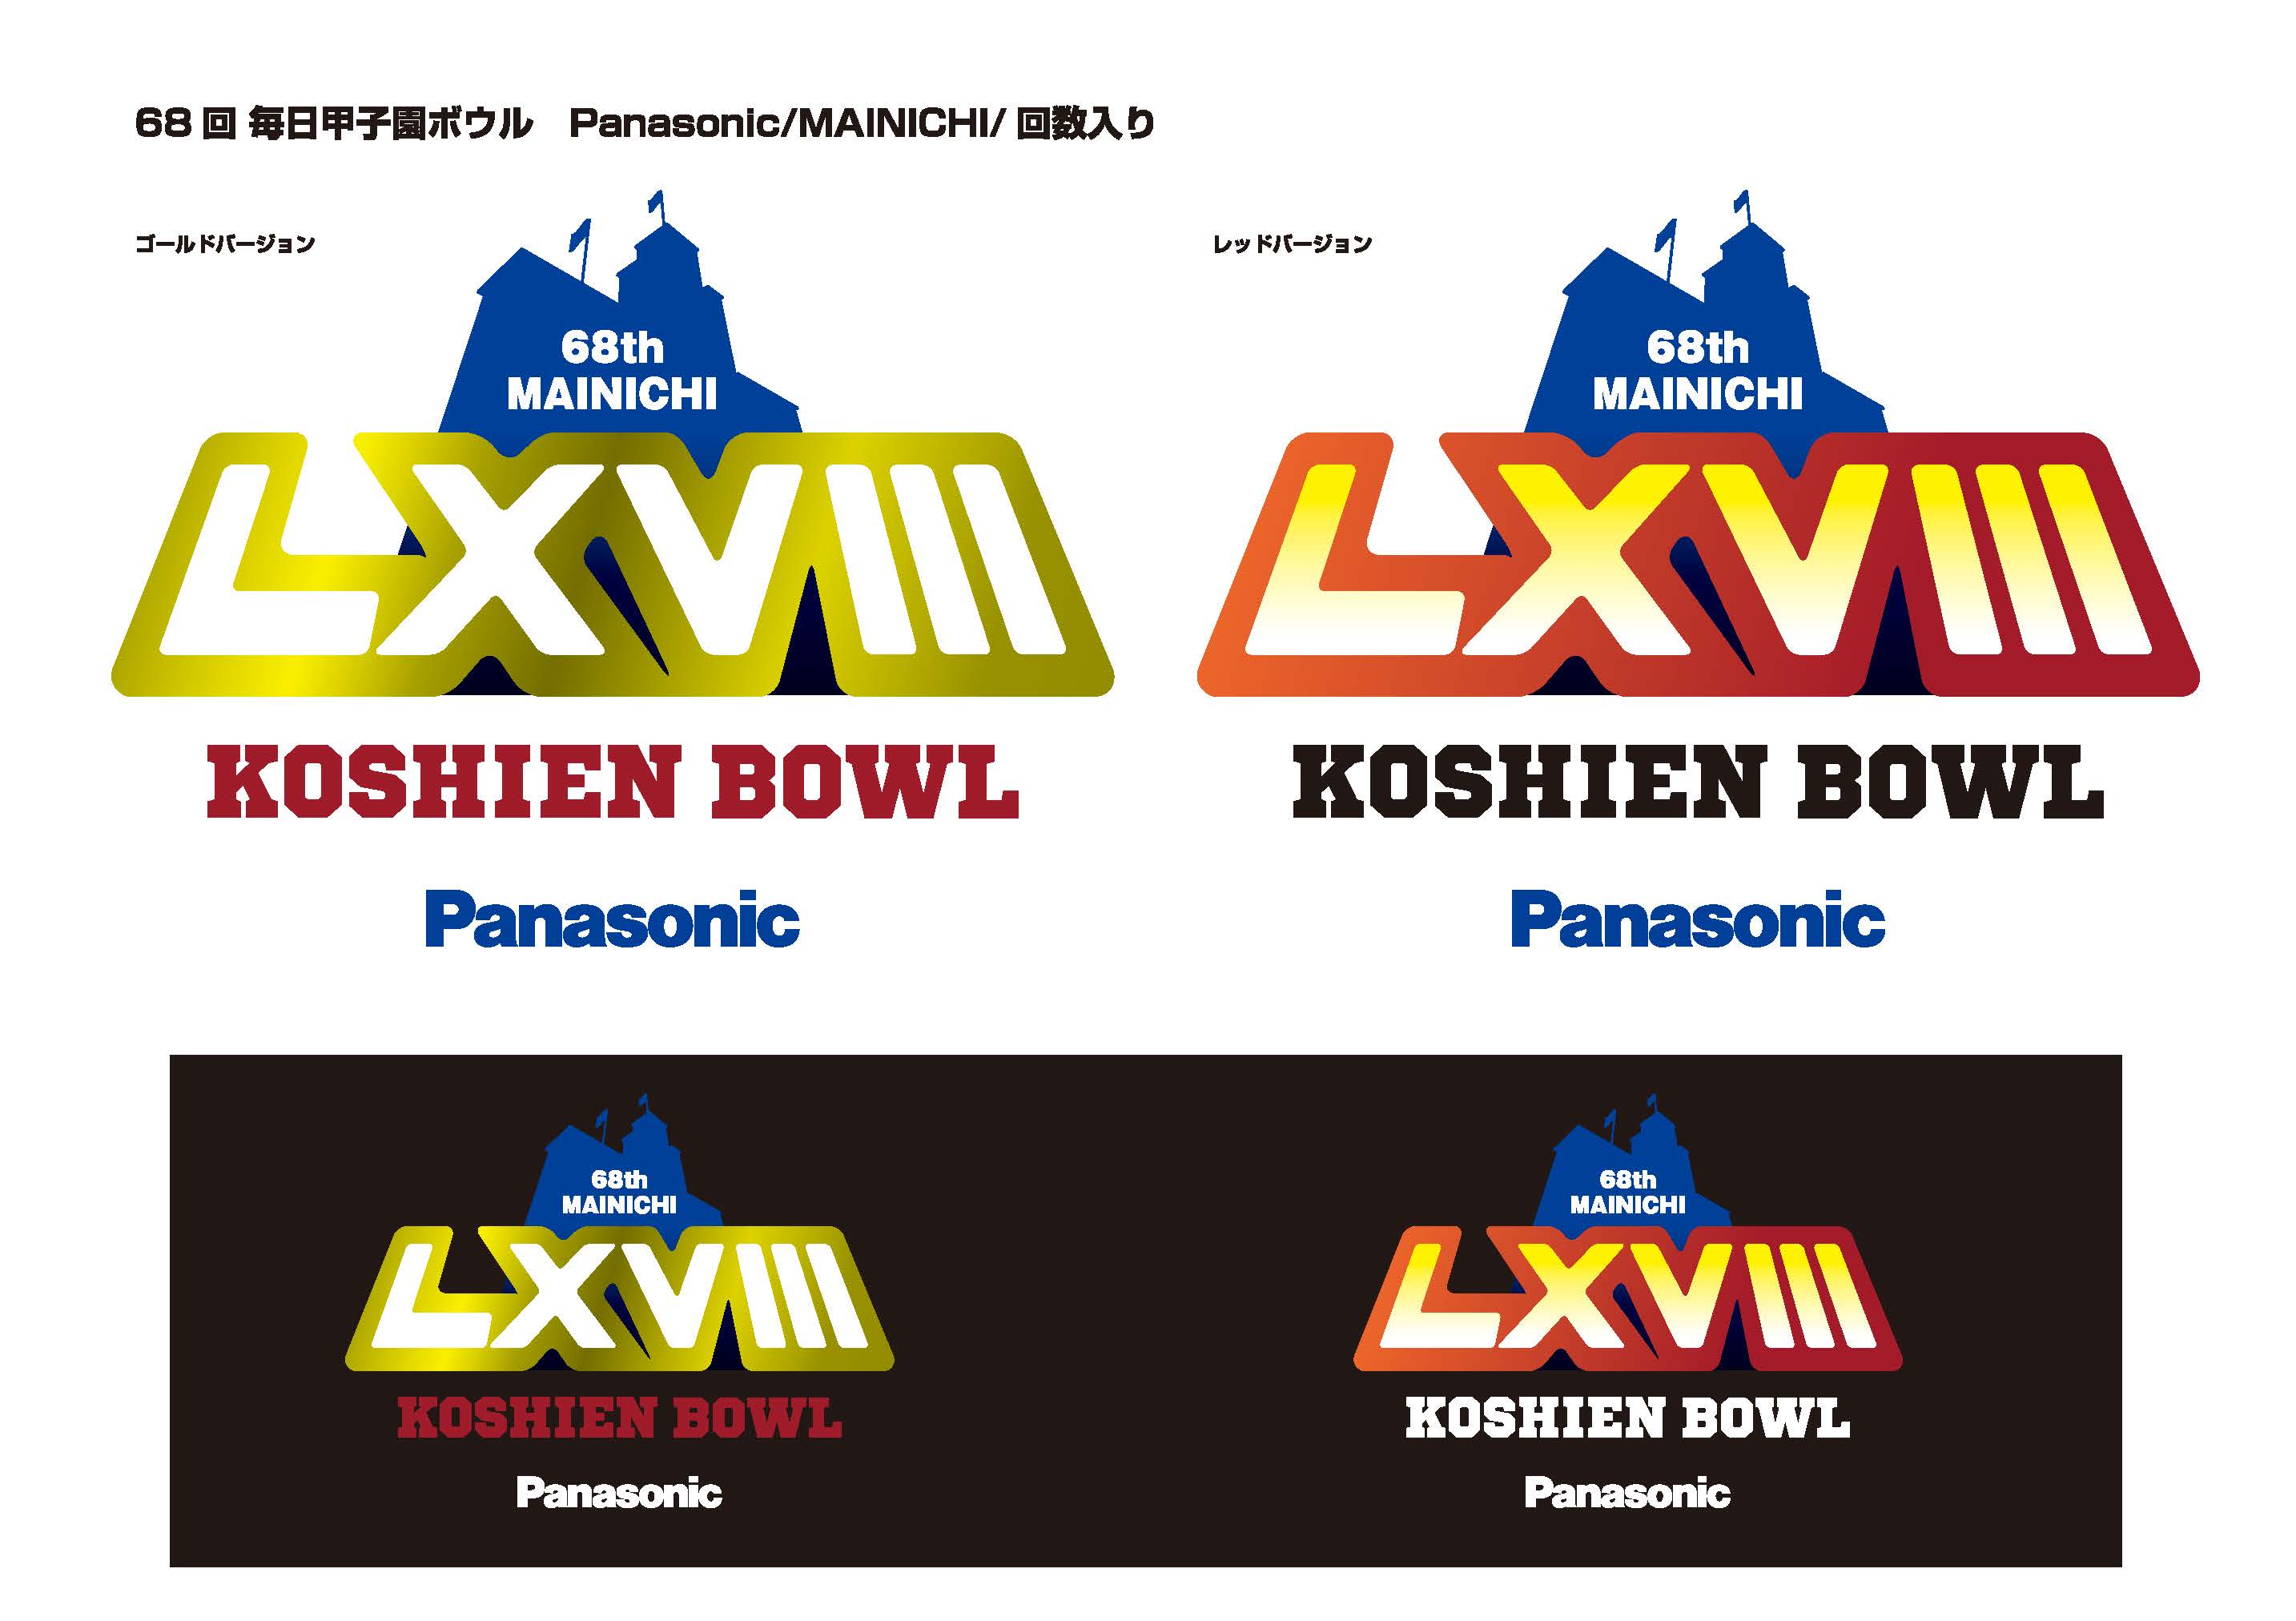 http://www.koshienbowl.jp/2013/logo1.jpg